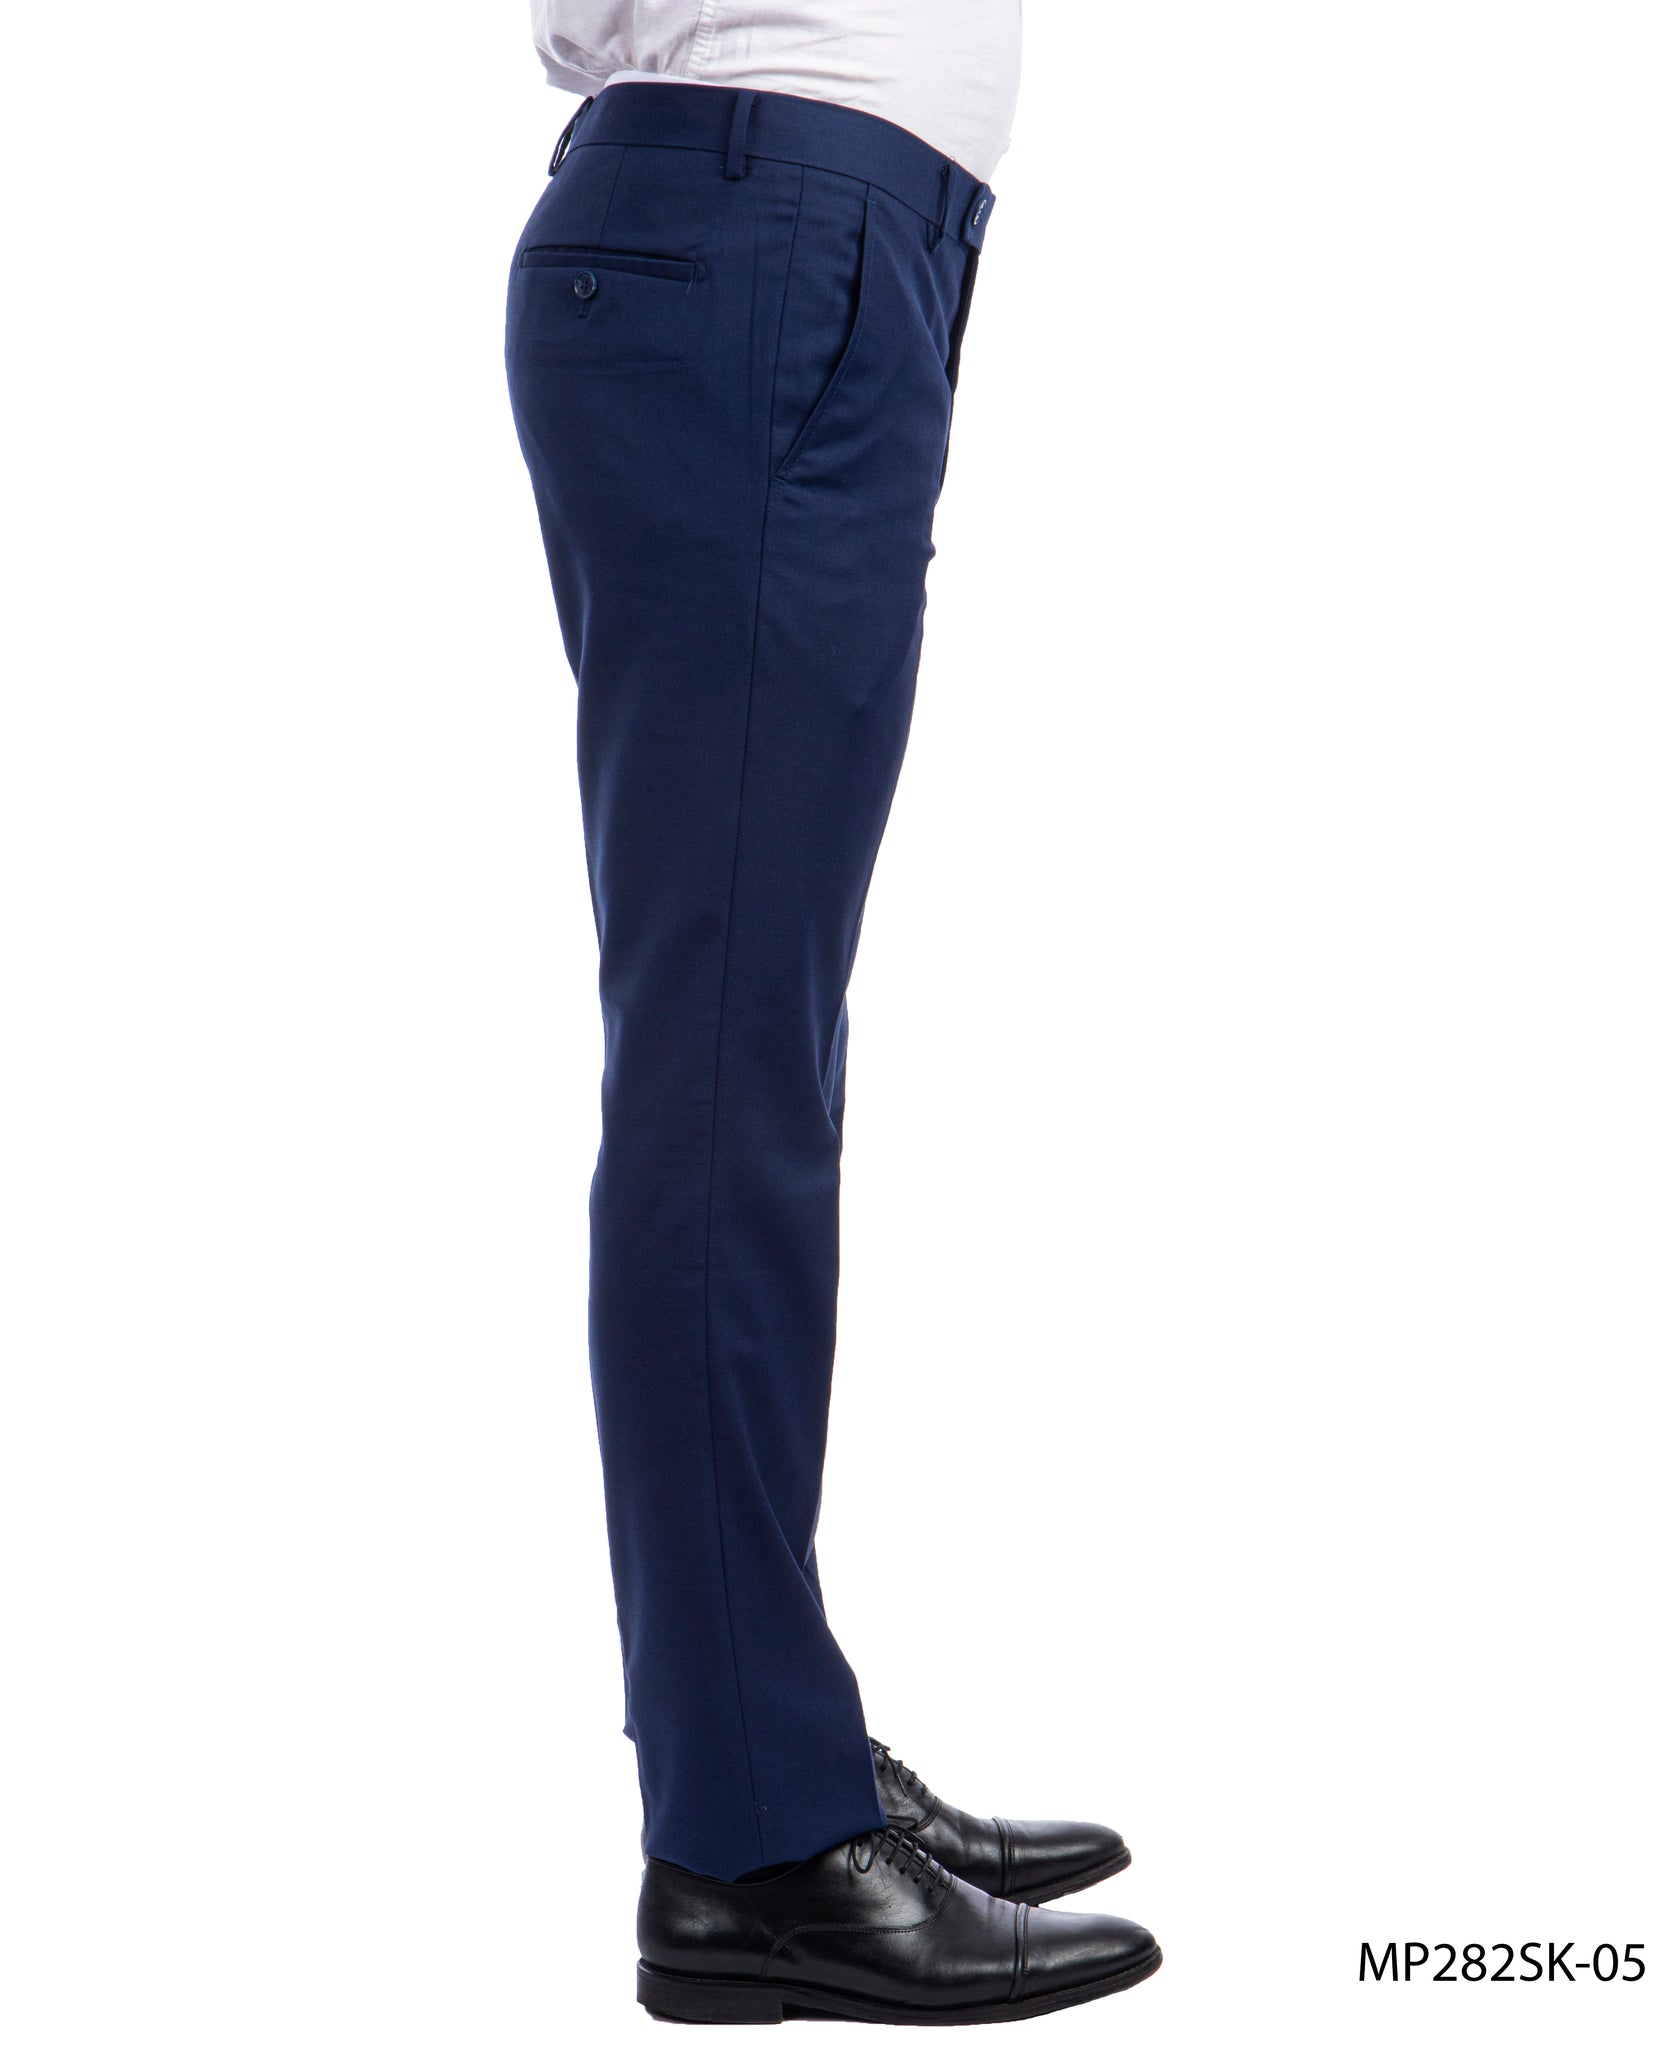 Sean Alexander Indigo Performance Stretch Dress Pants For Men